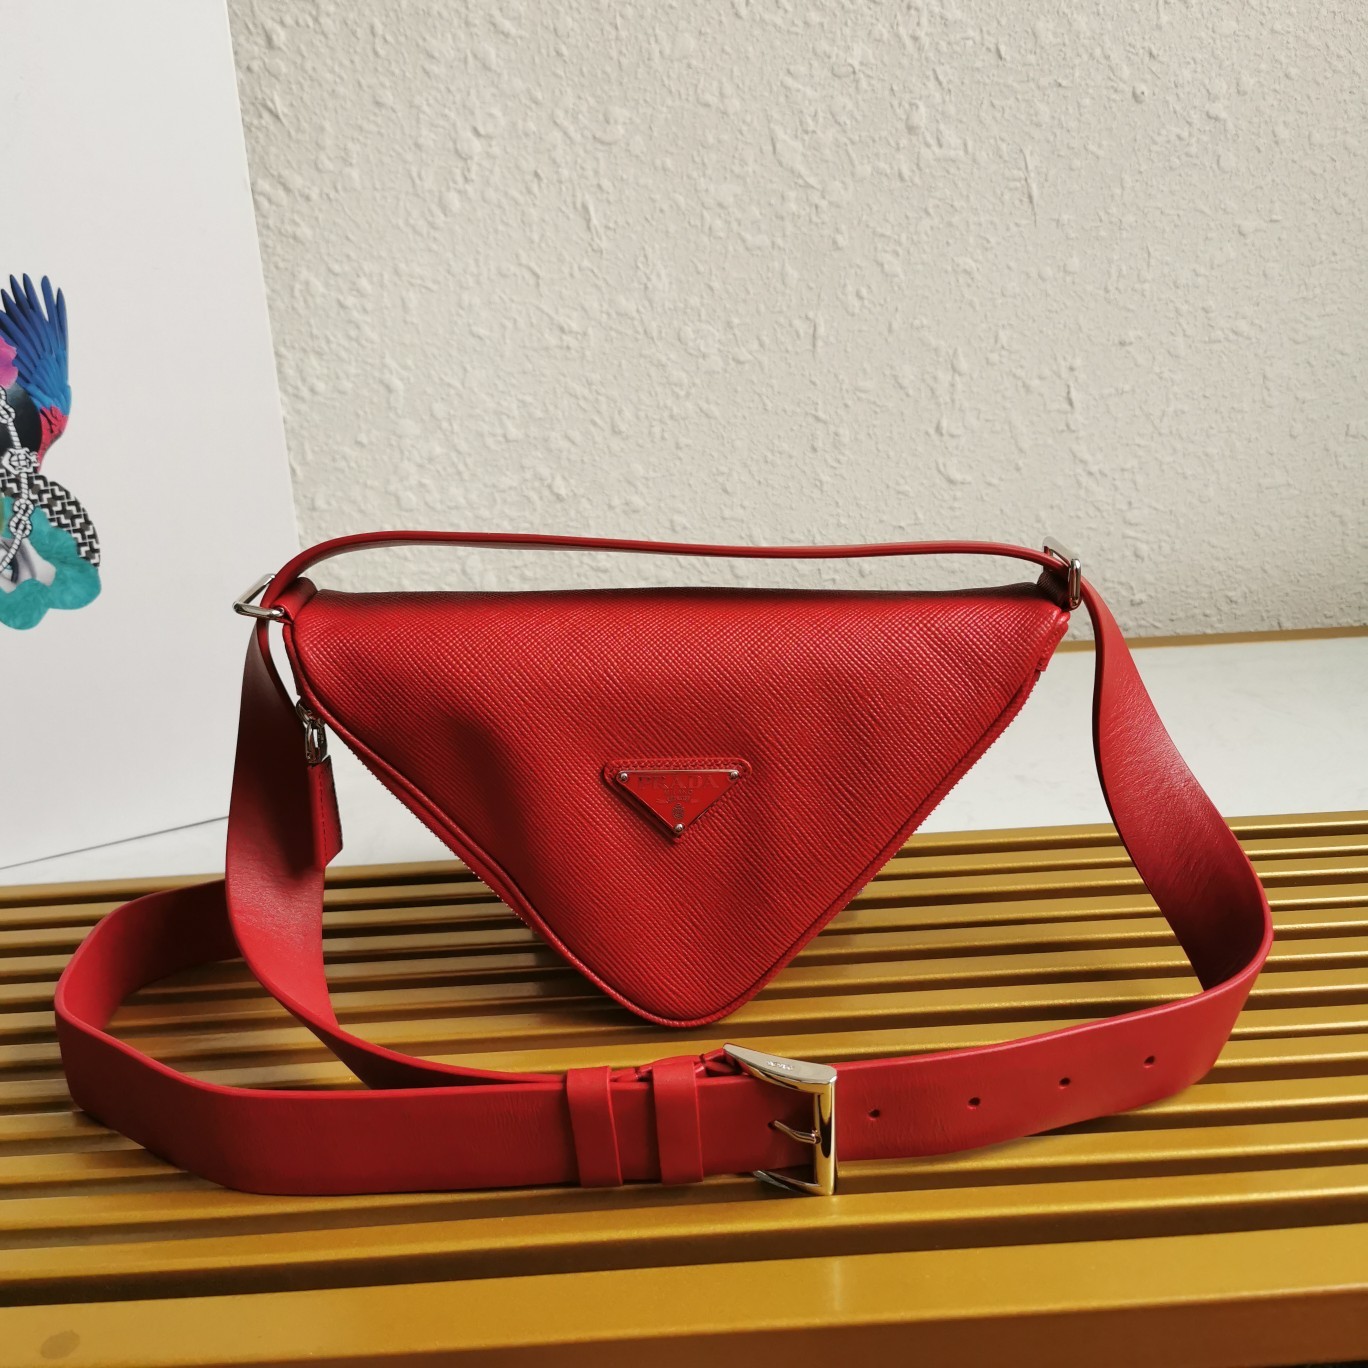 Triangular a bag on belt 25 cm